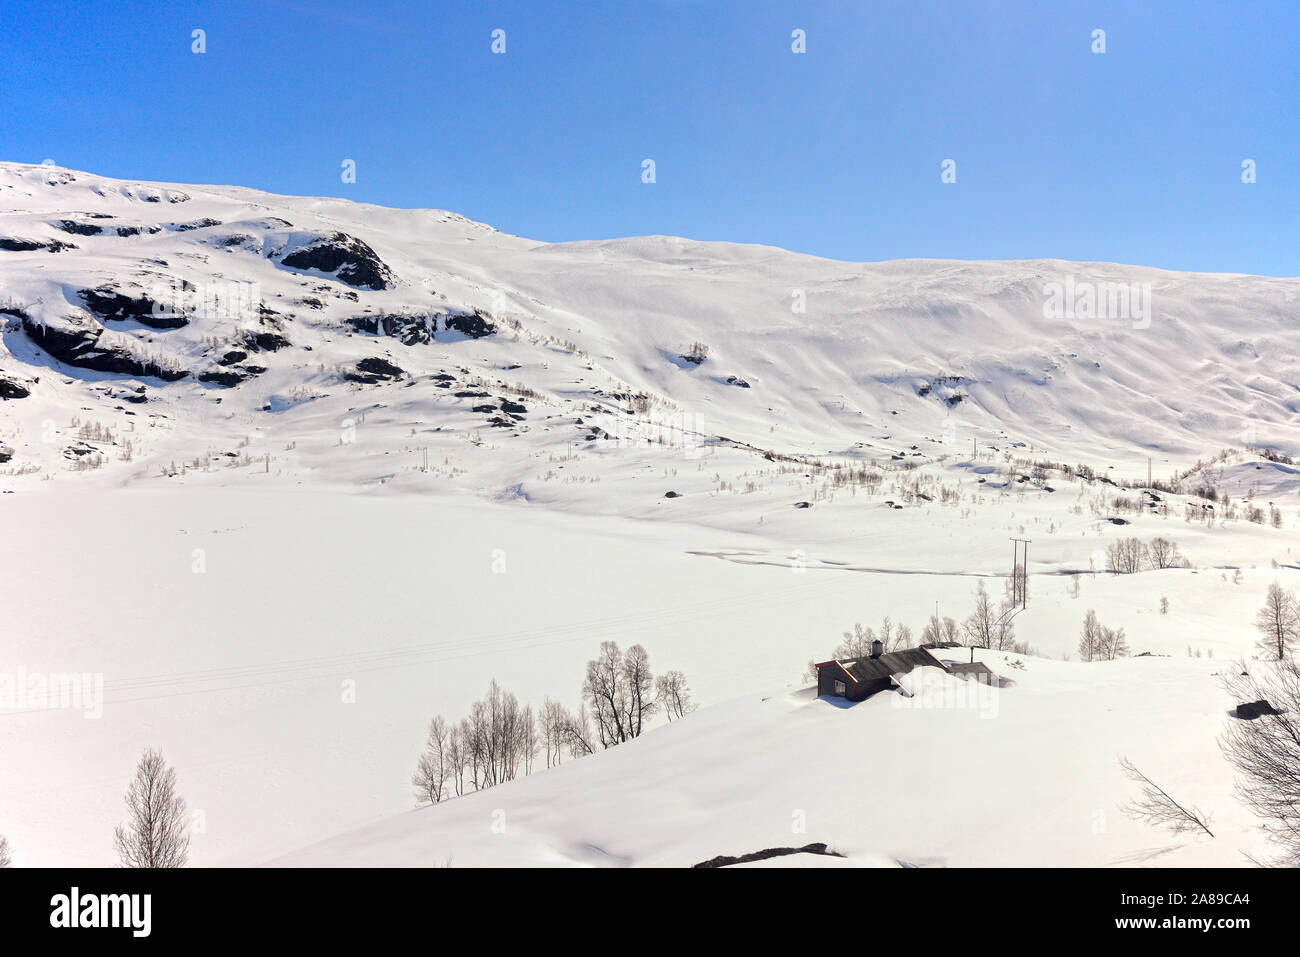 The snowy mountains at the Hardangervidda National Park. Norwayskyline Stock Photo